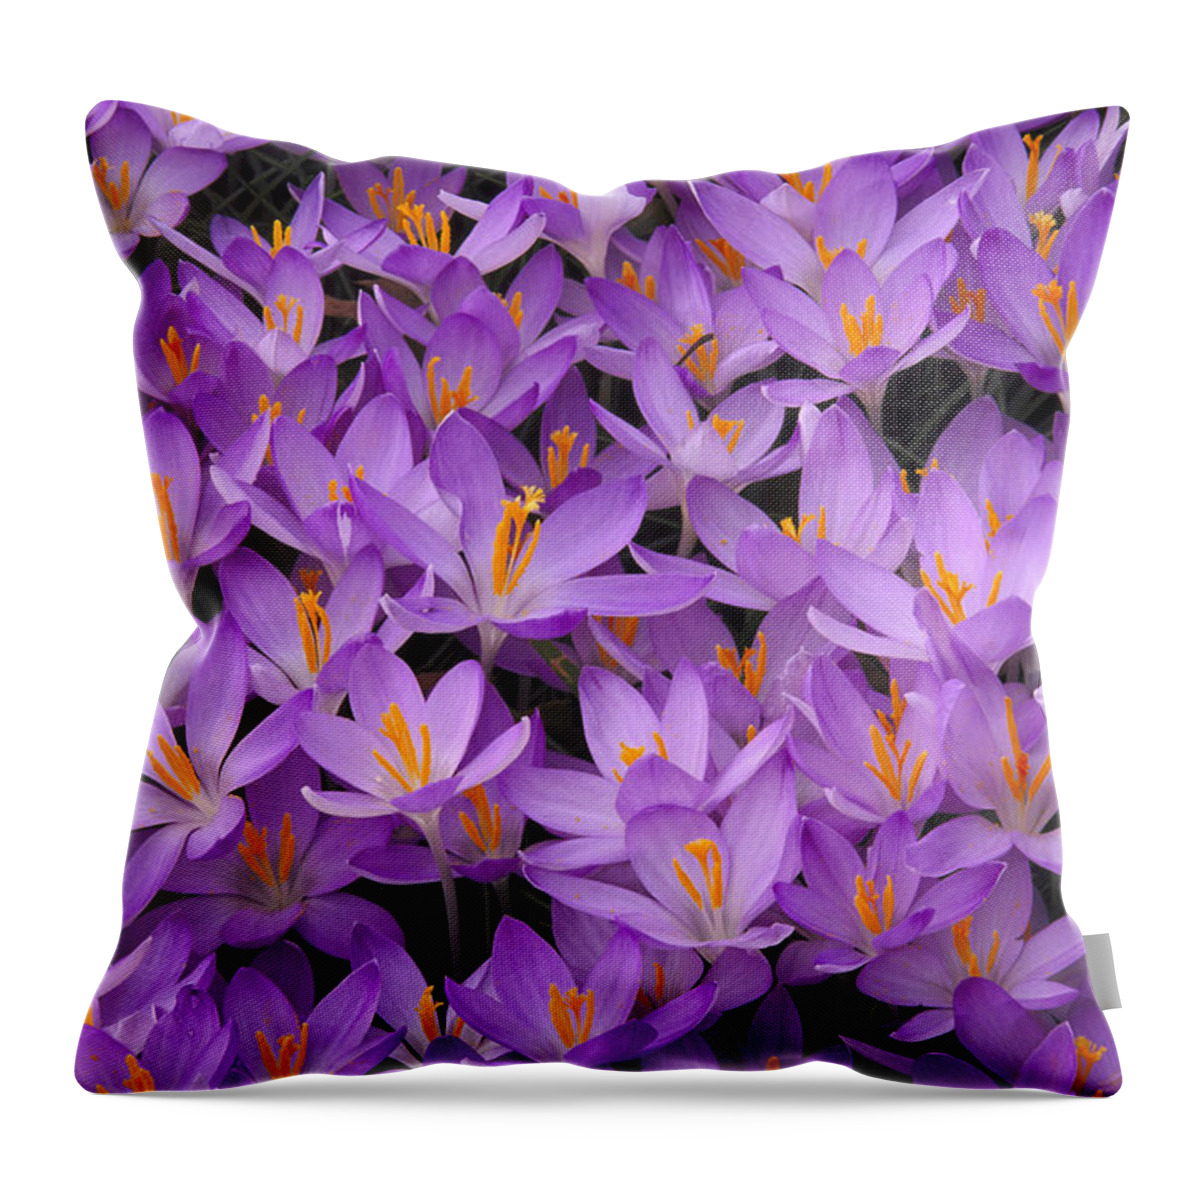 Textured Throw Pillow featuring the photograph Crocus, Crocus Sp, Pattern In Flowers by Adam Jones